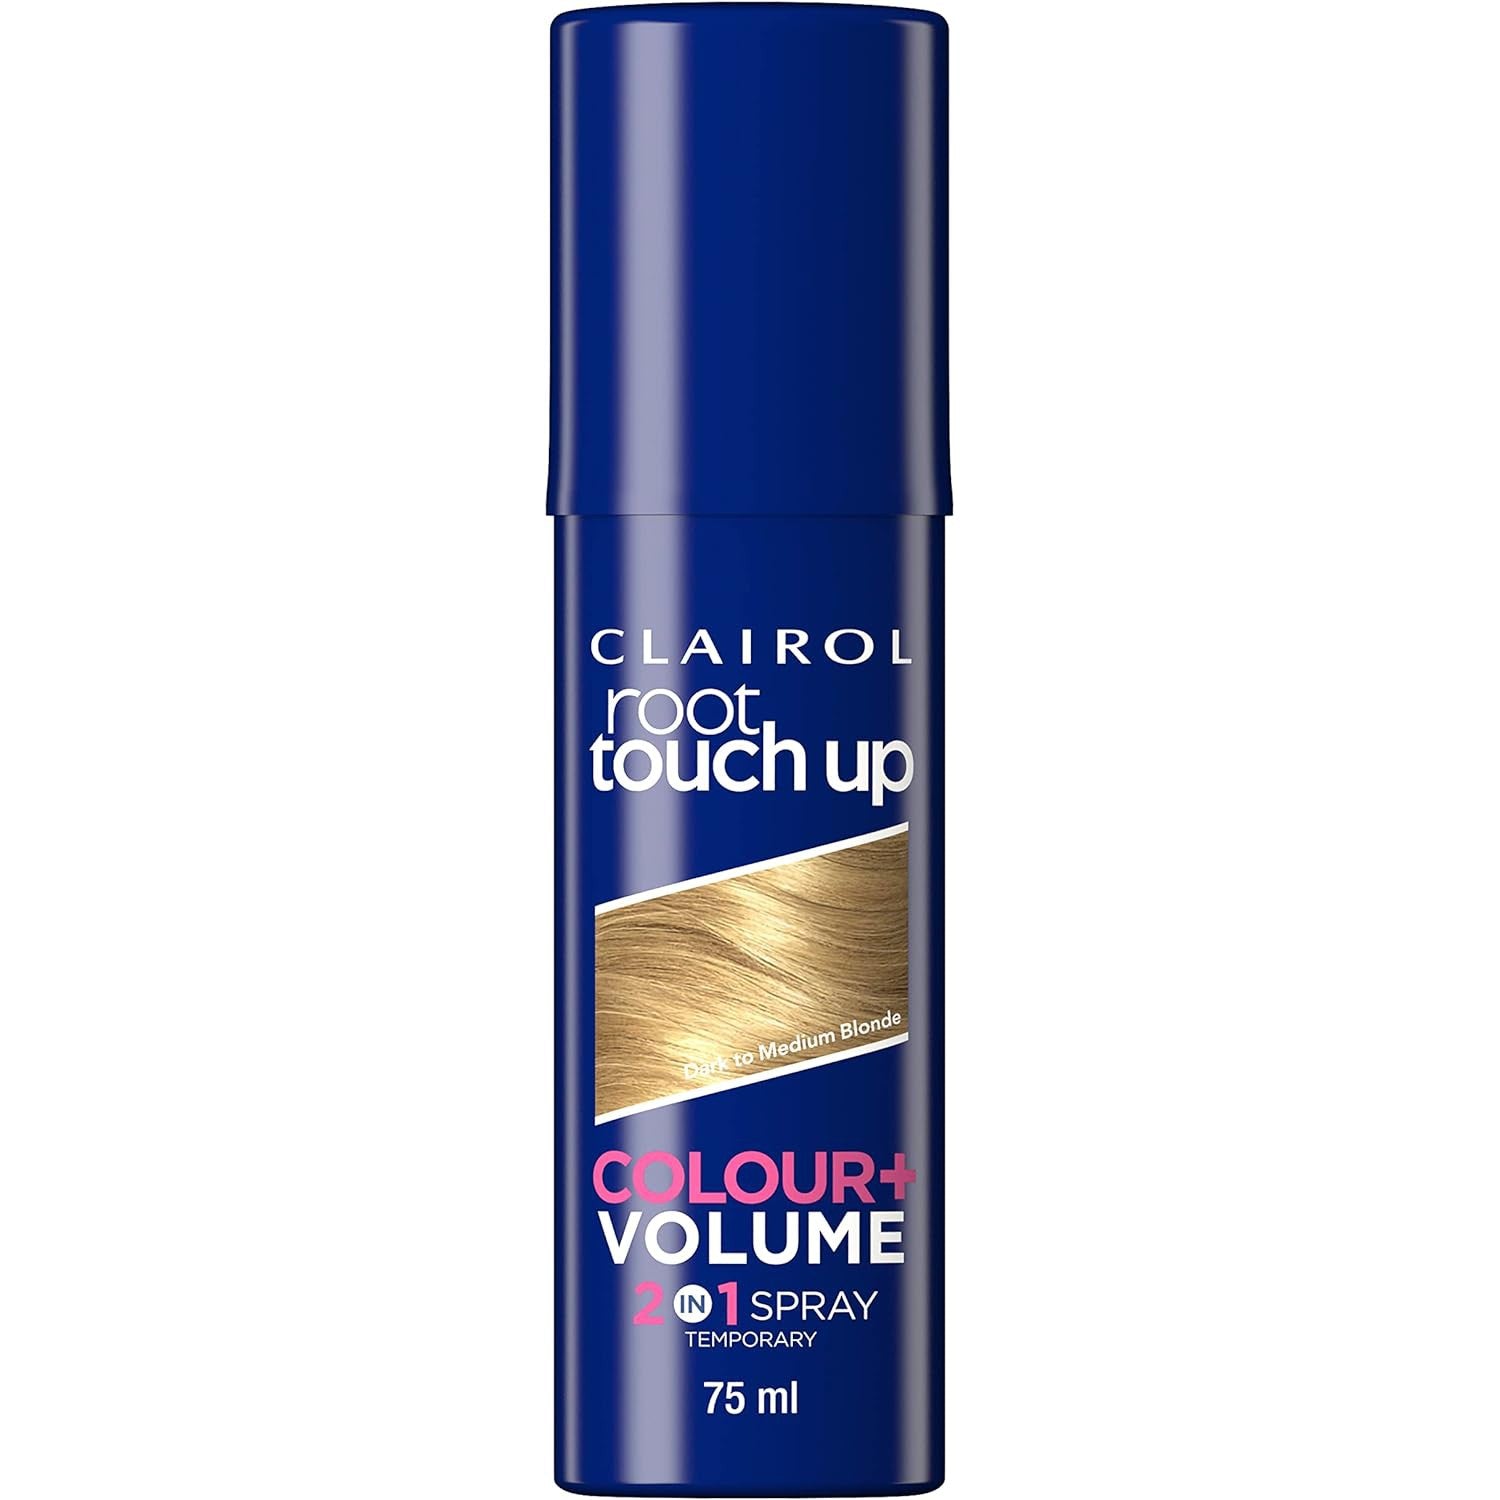 Clairol root touch up color + volume 2 in 1 spray dark to medium blonde, 75ml